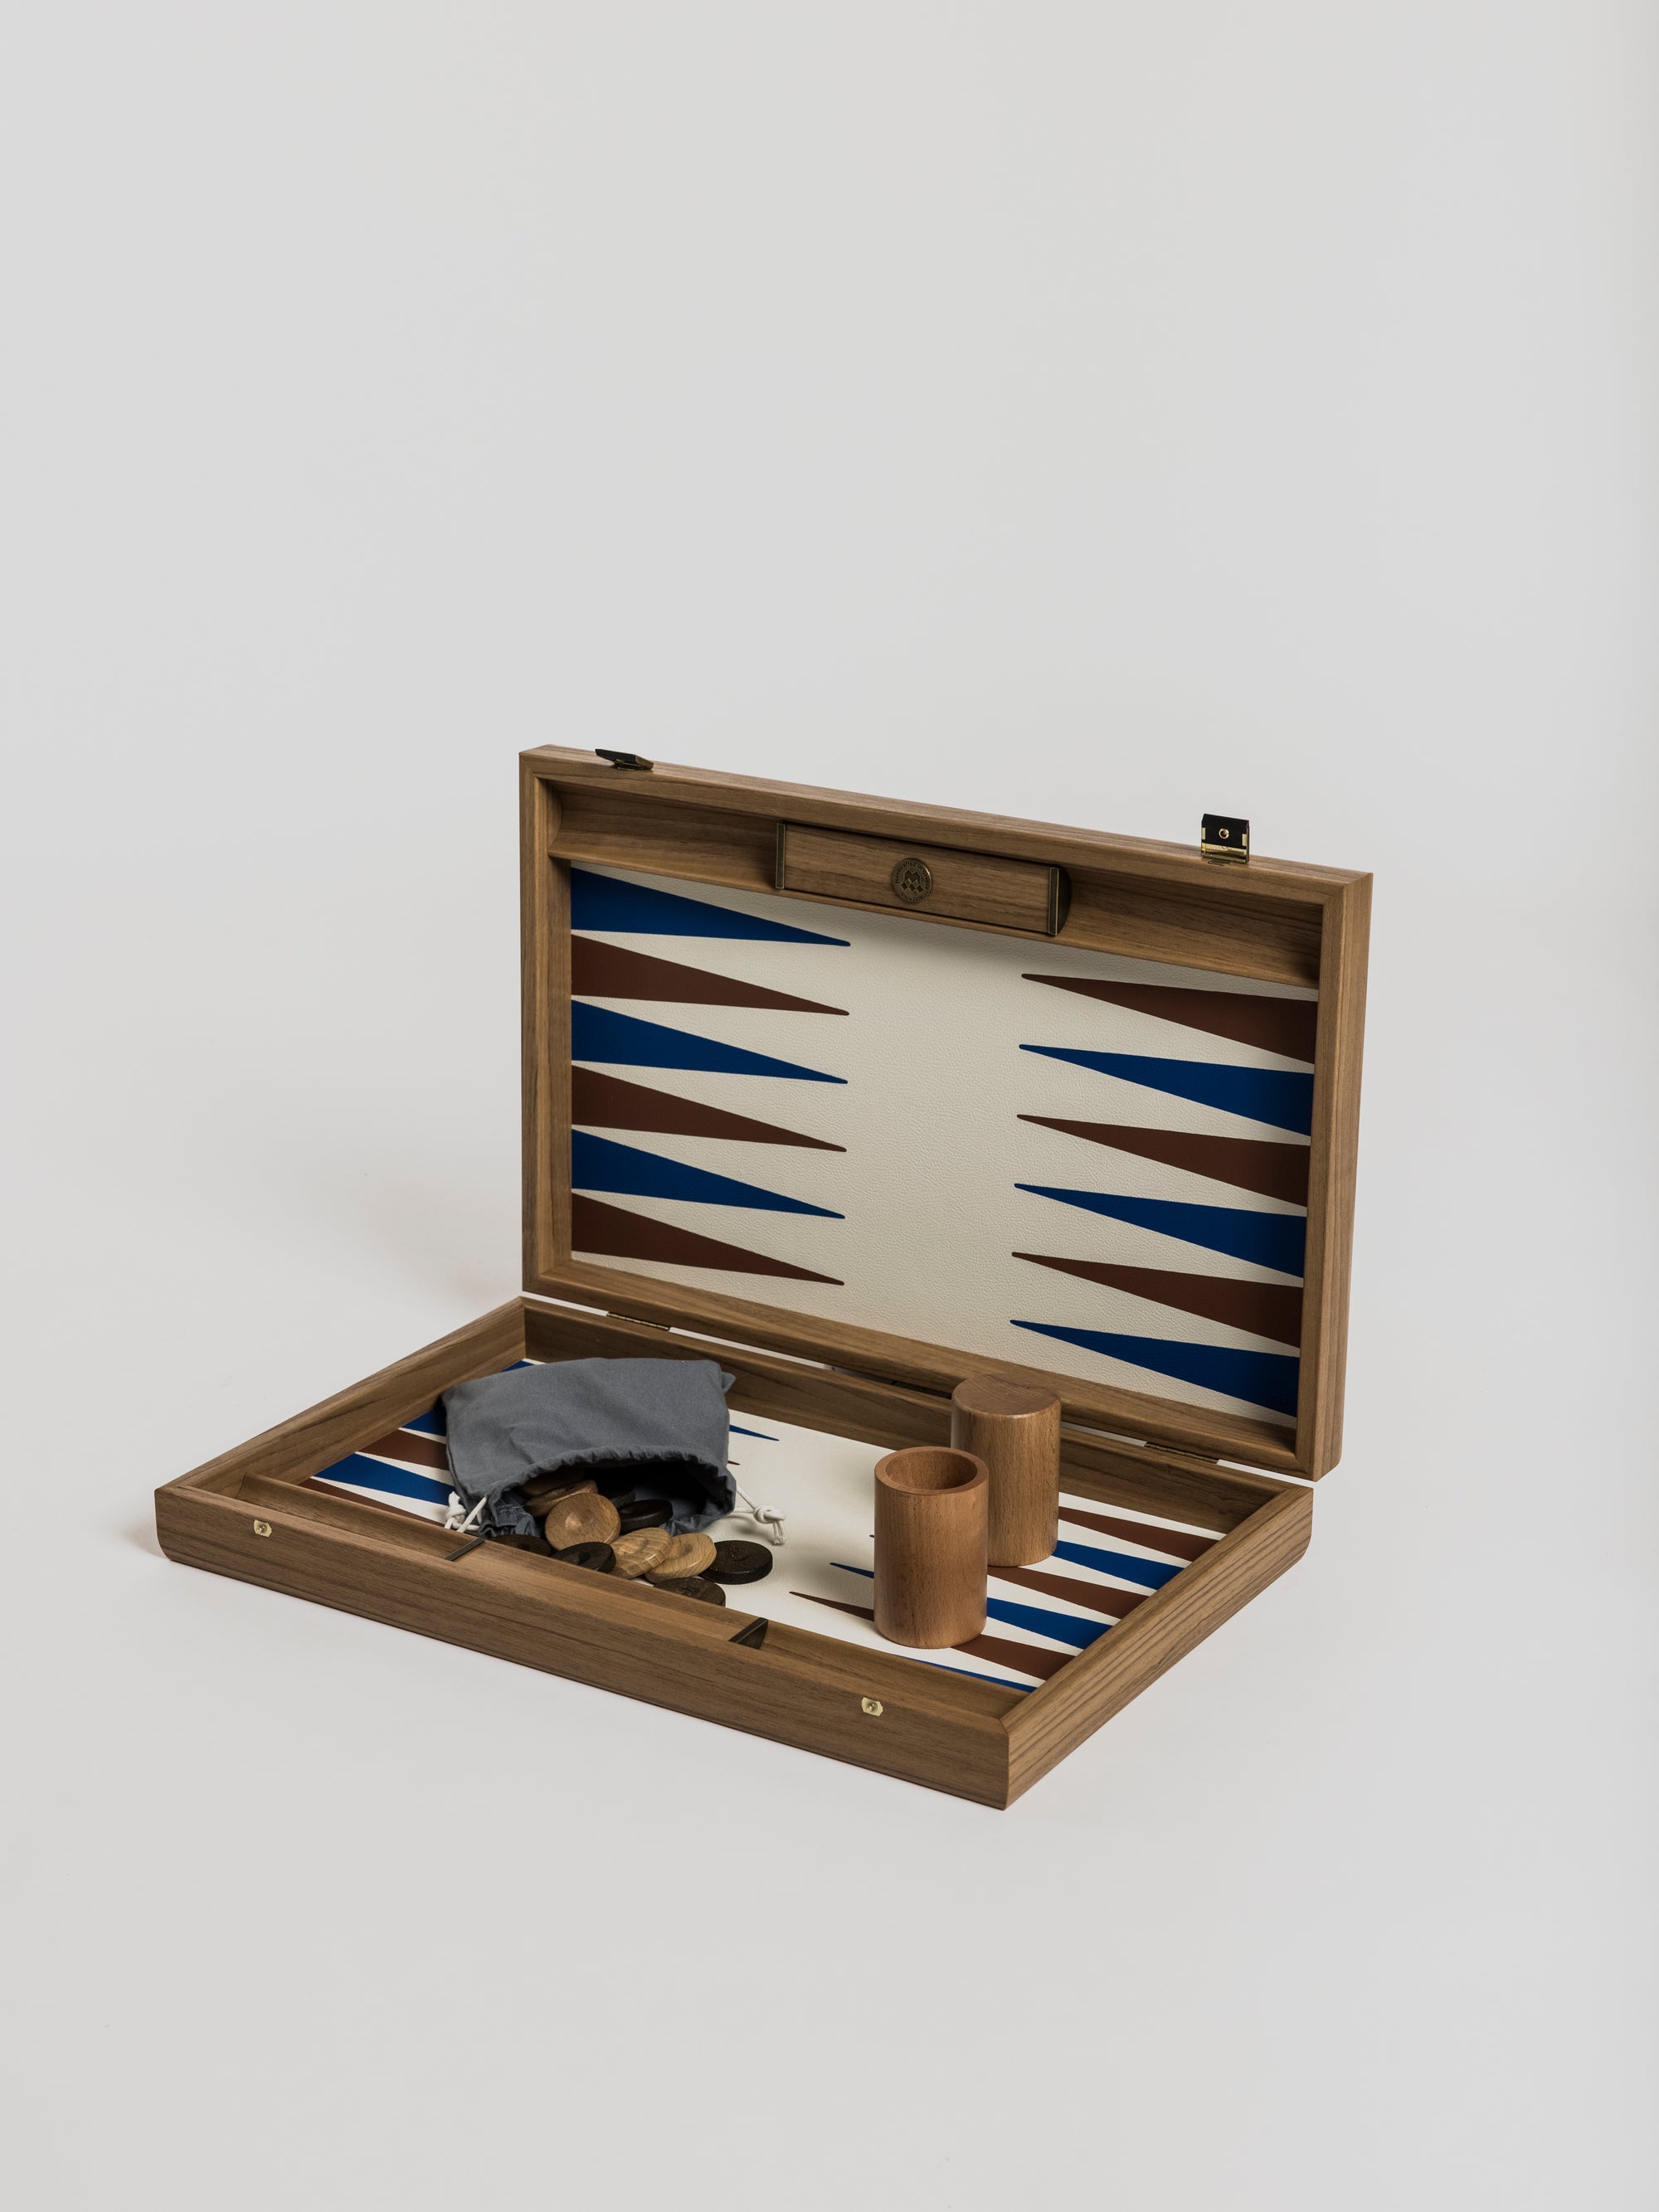 Backgammon - Champagne Beige Inlaid Leatherette - Cigale et Fourmi